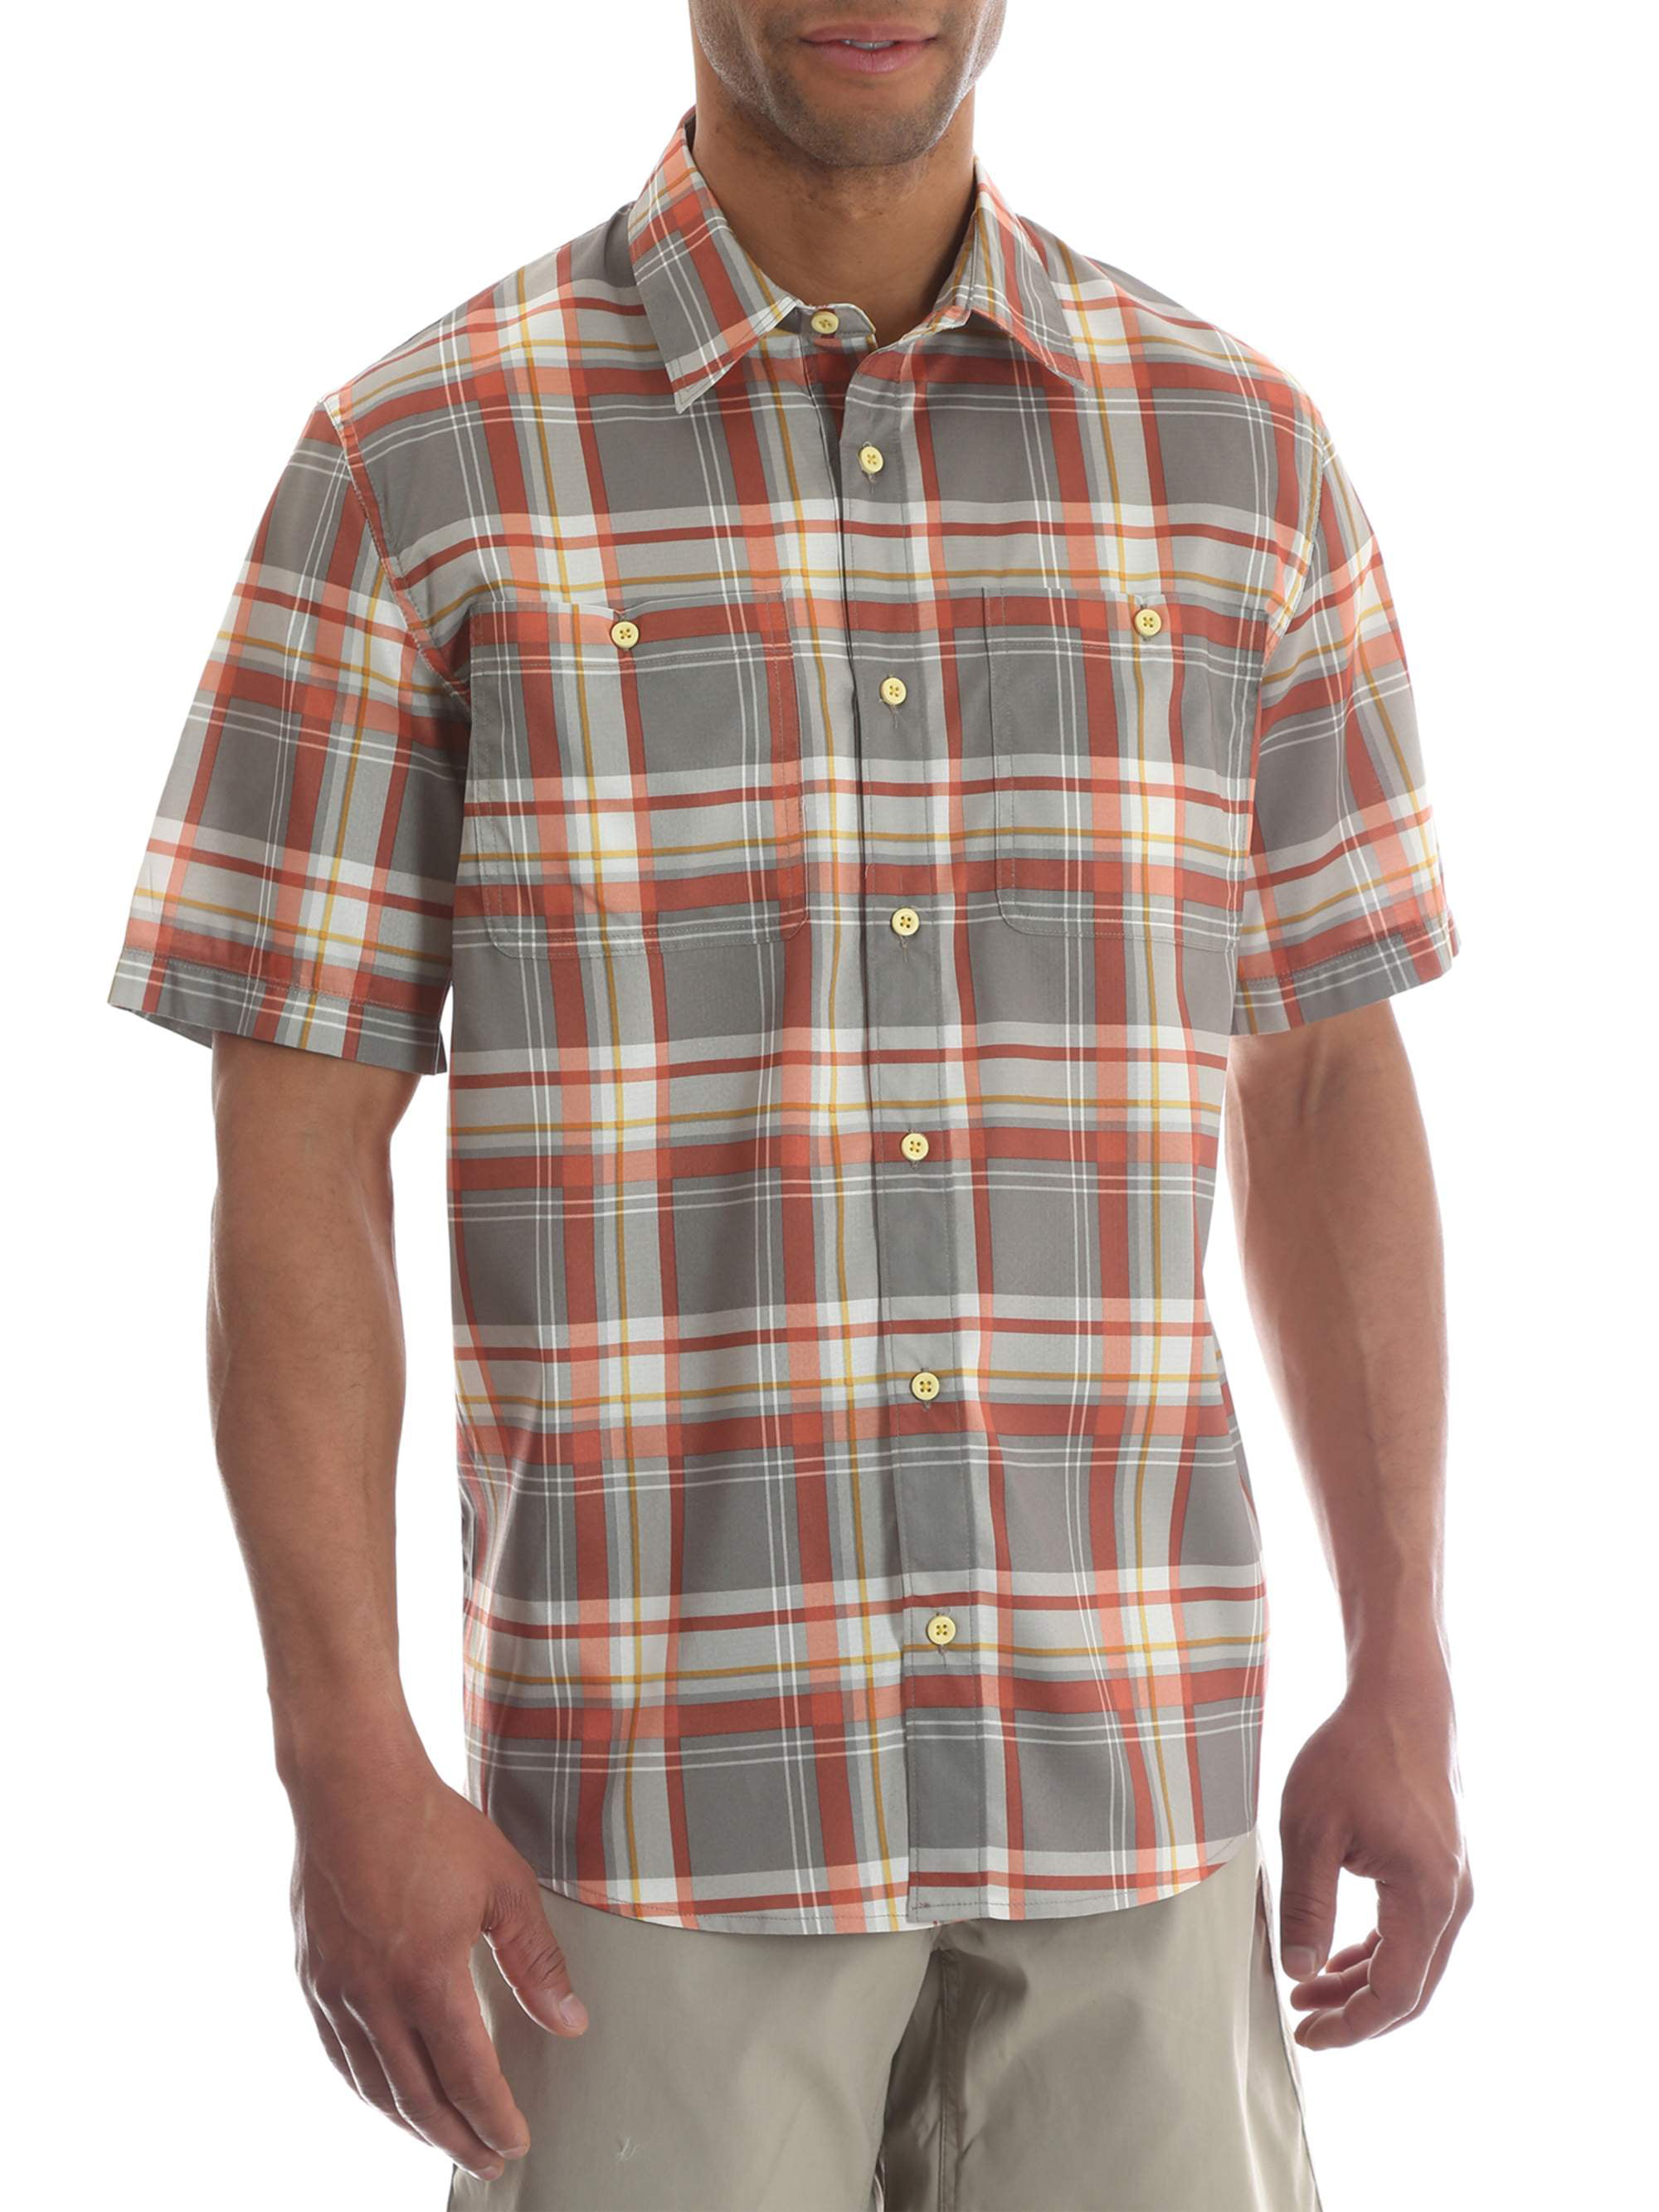 Men's Short Sleeve Utility Shirt - Walmart.com